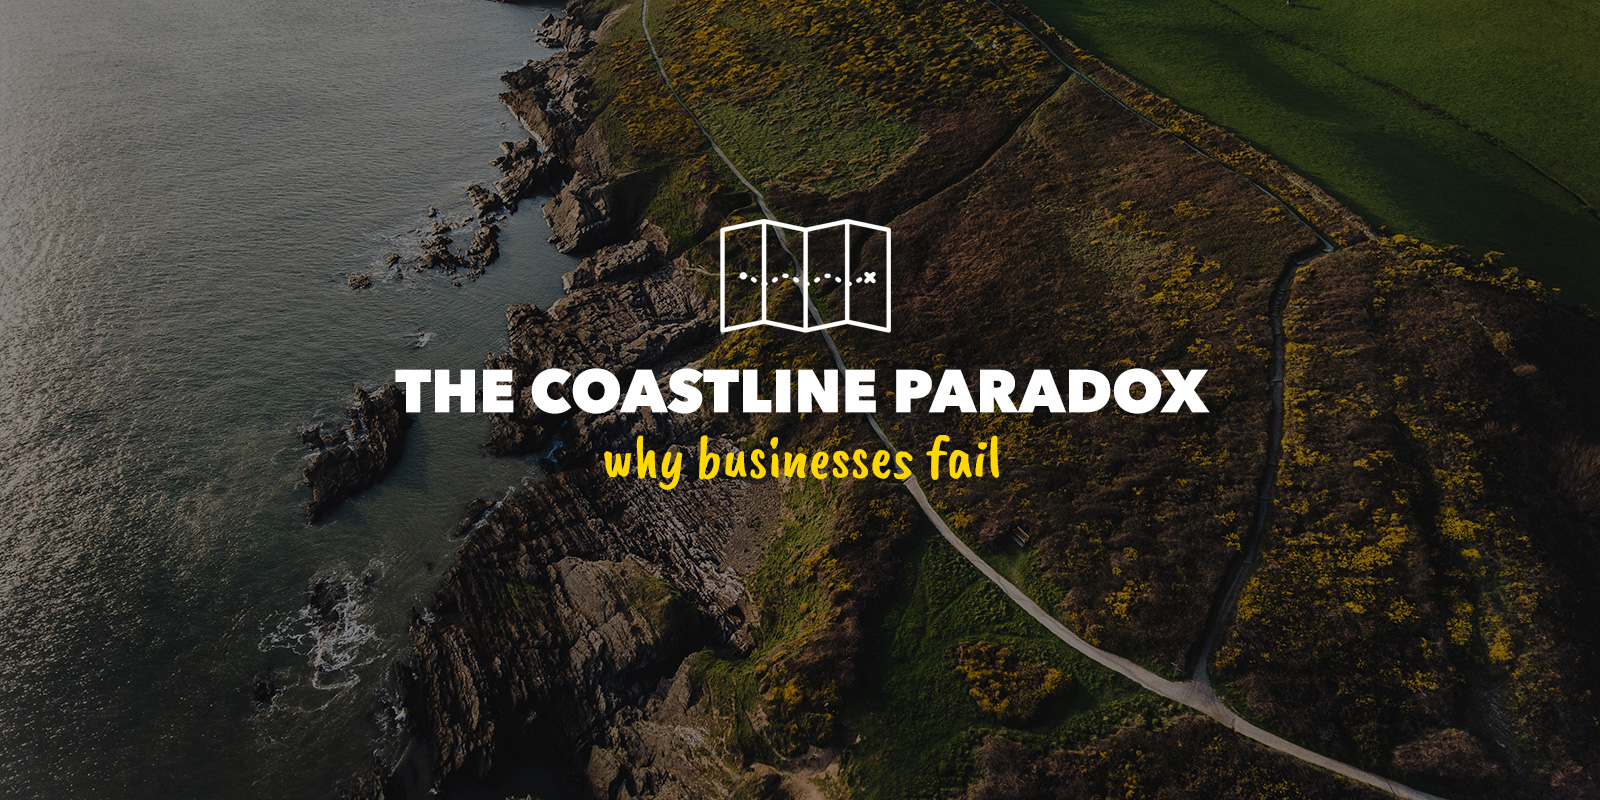 the coastline paradox, why businesses fail